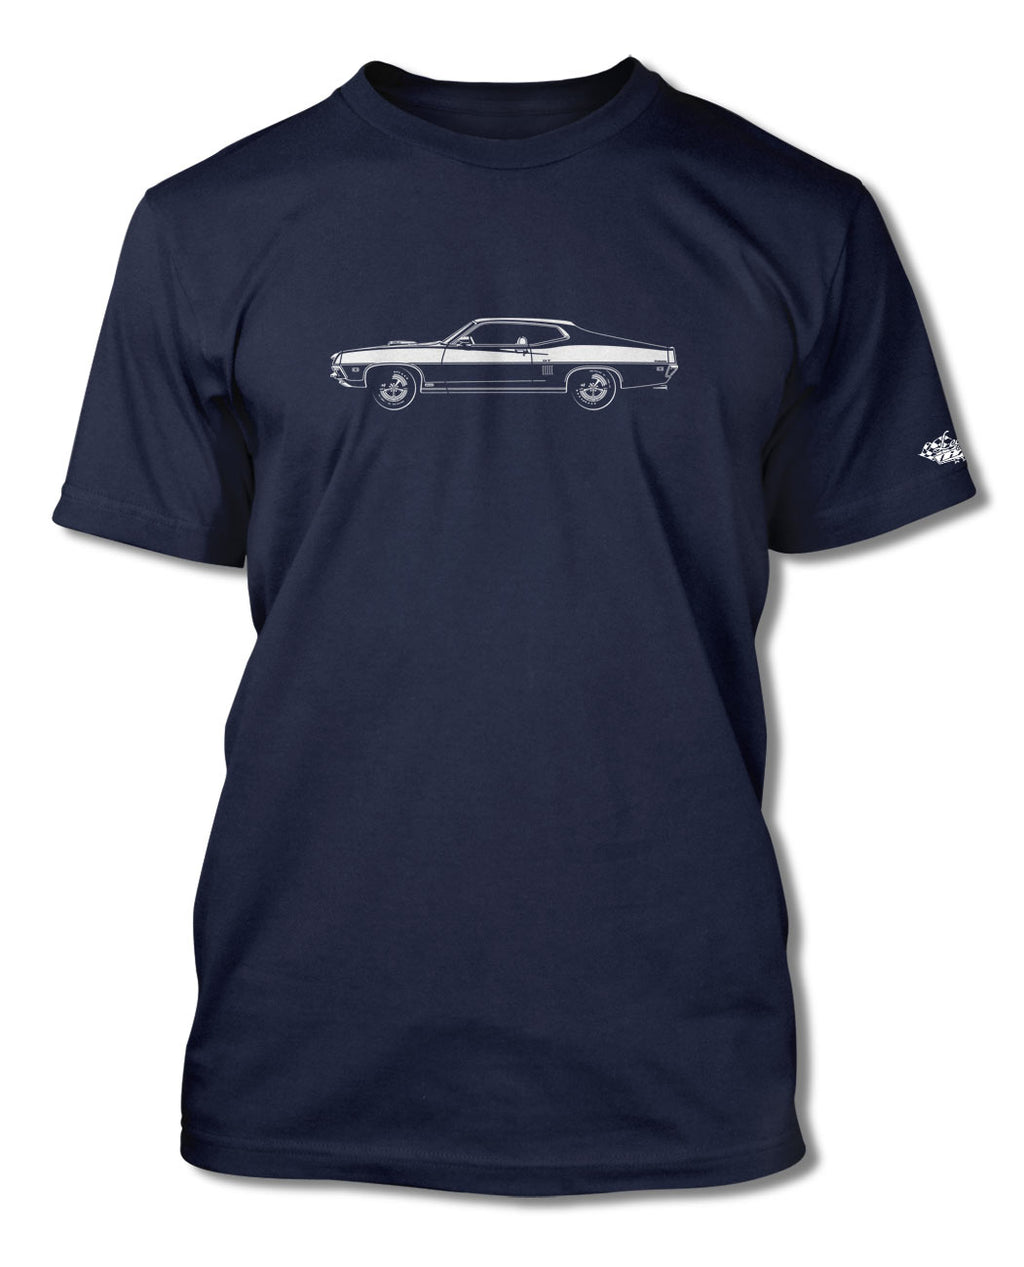 1970 Ford Torino GT Cobra jet Fastback T-Shirt - Men - Side View